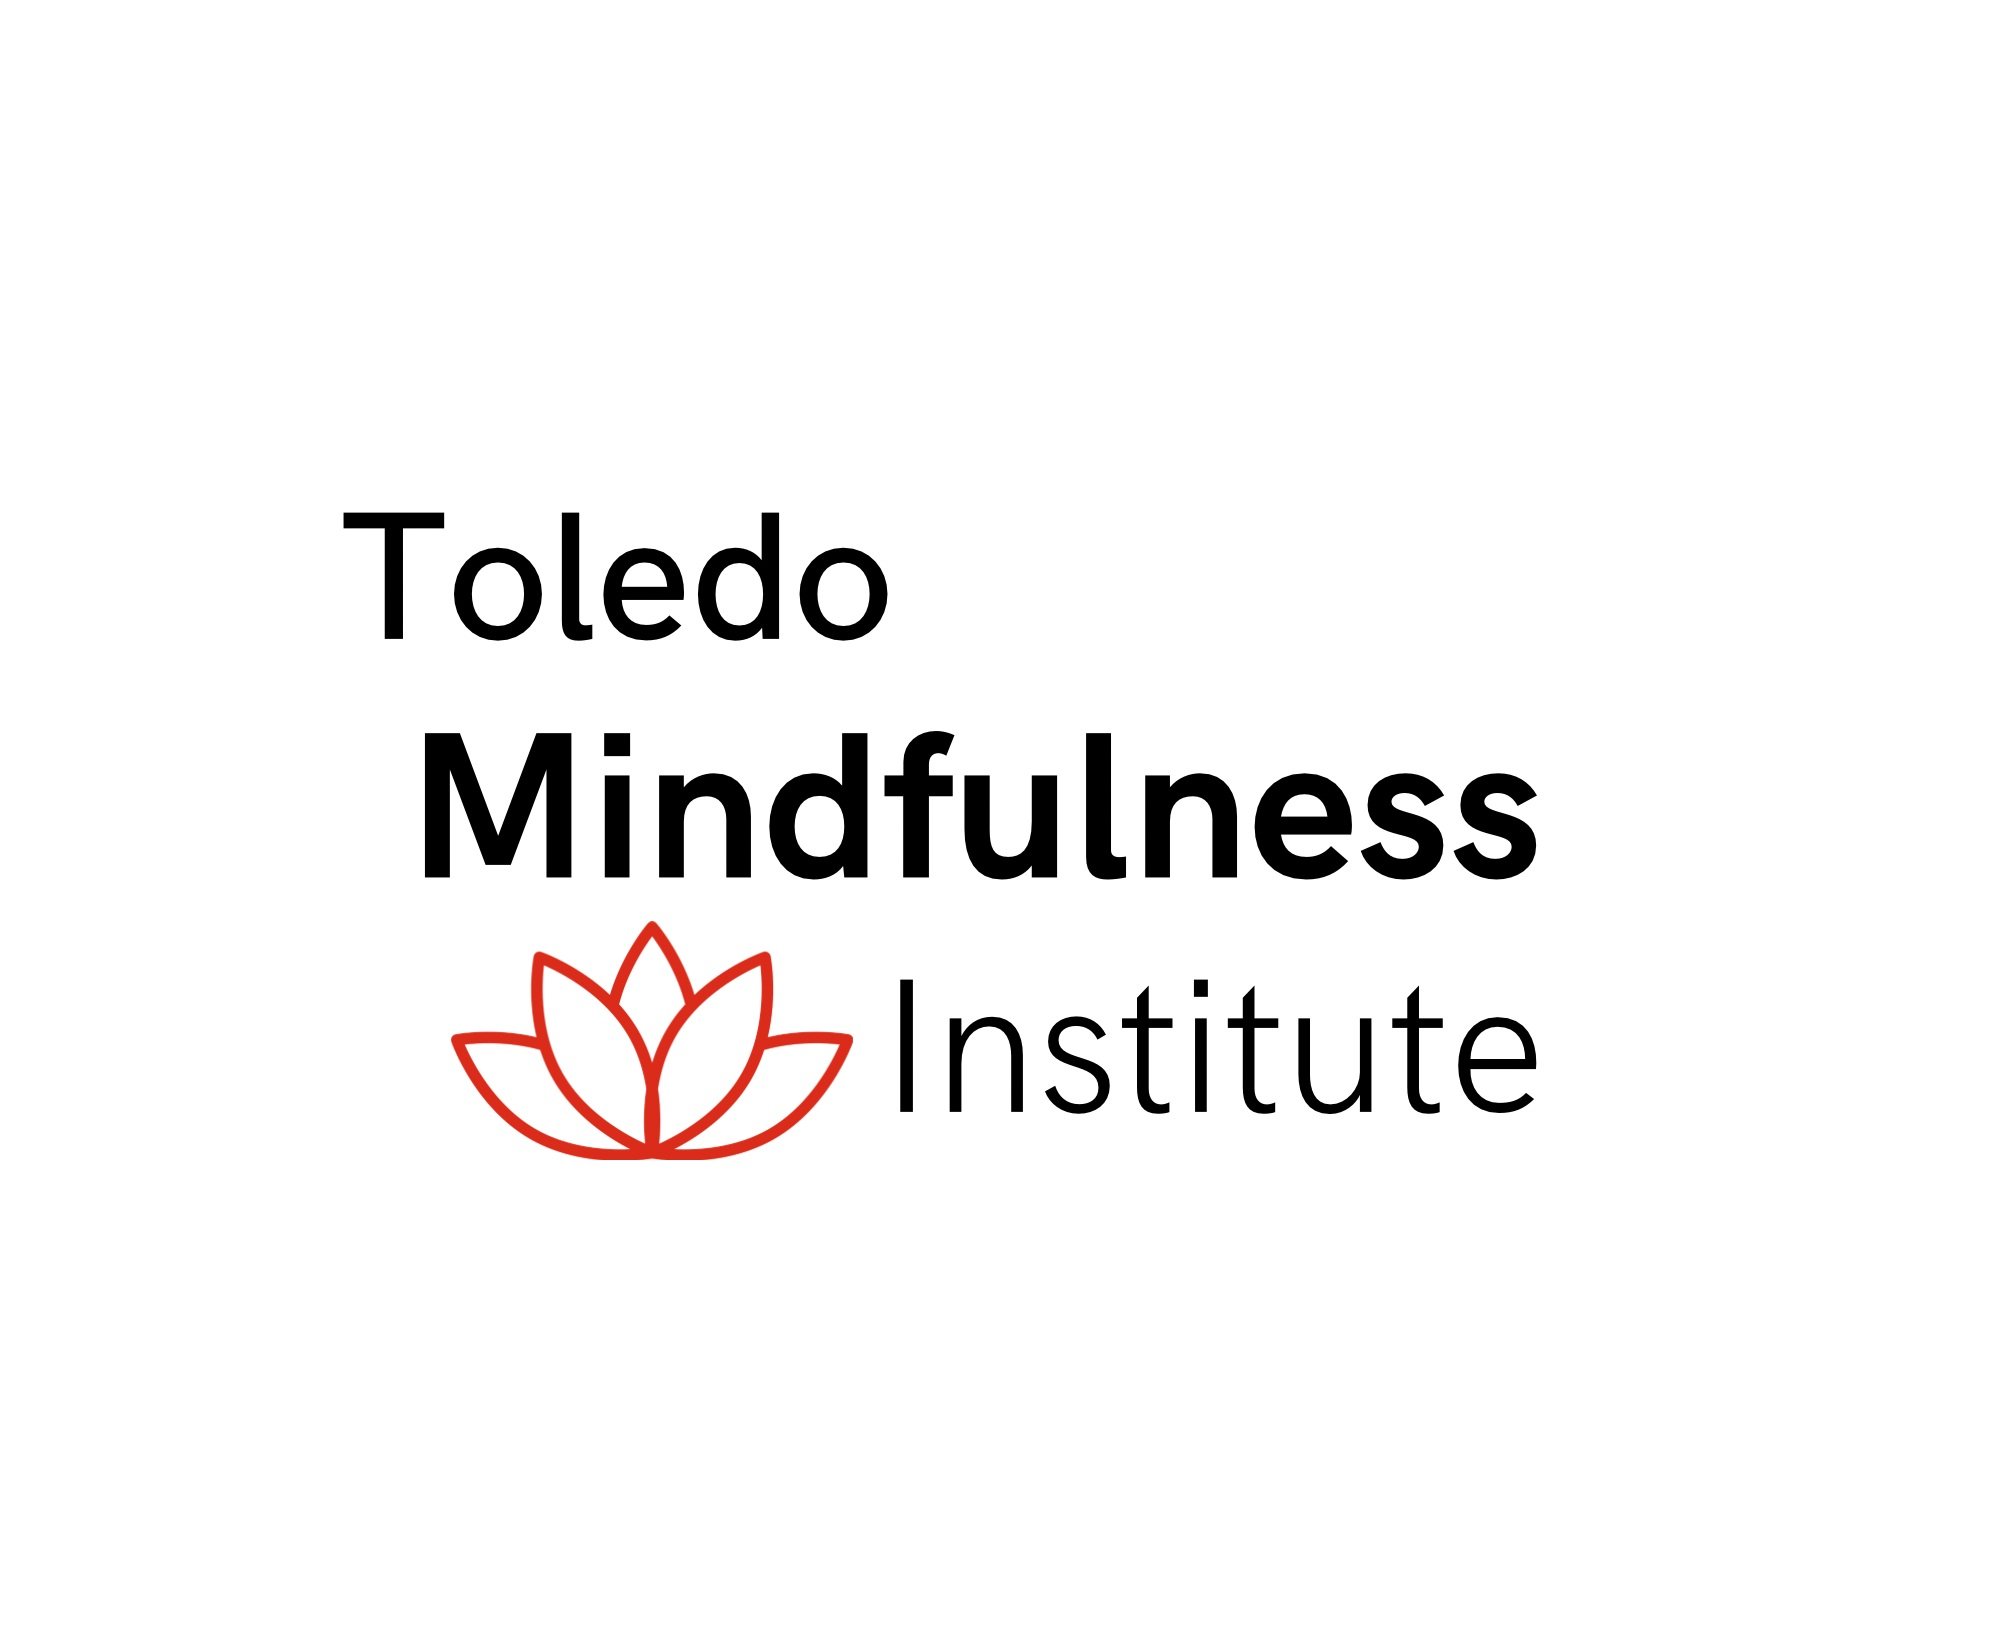 Toledo Mindfulness Institute